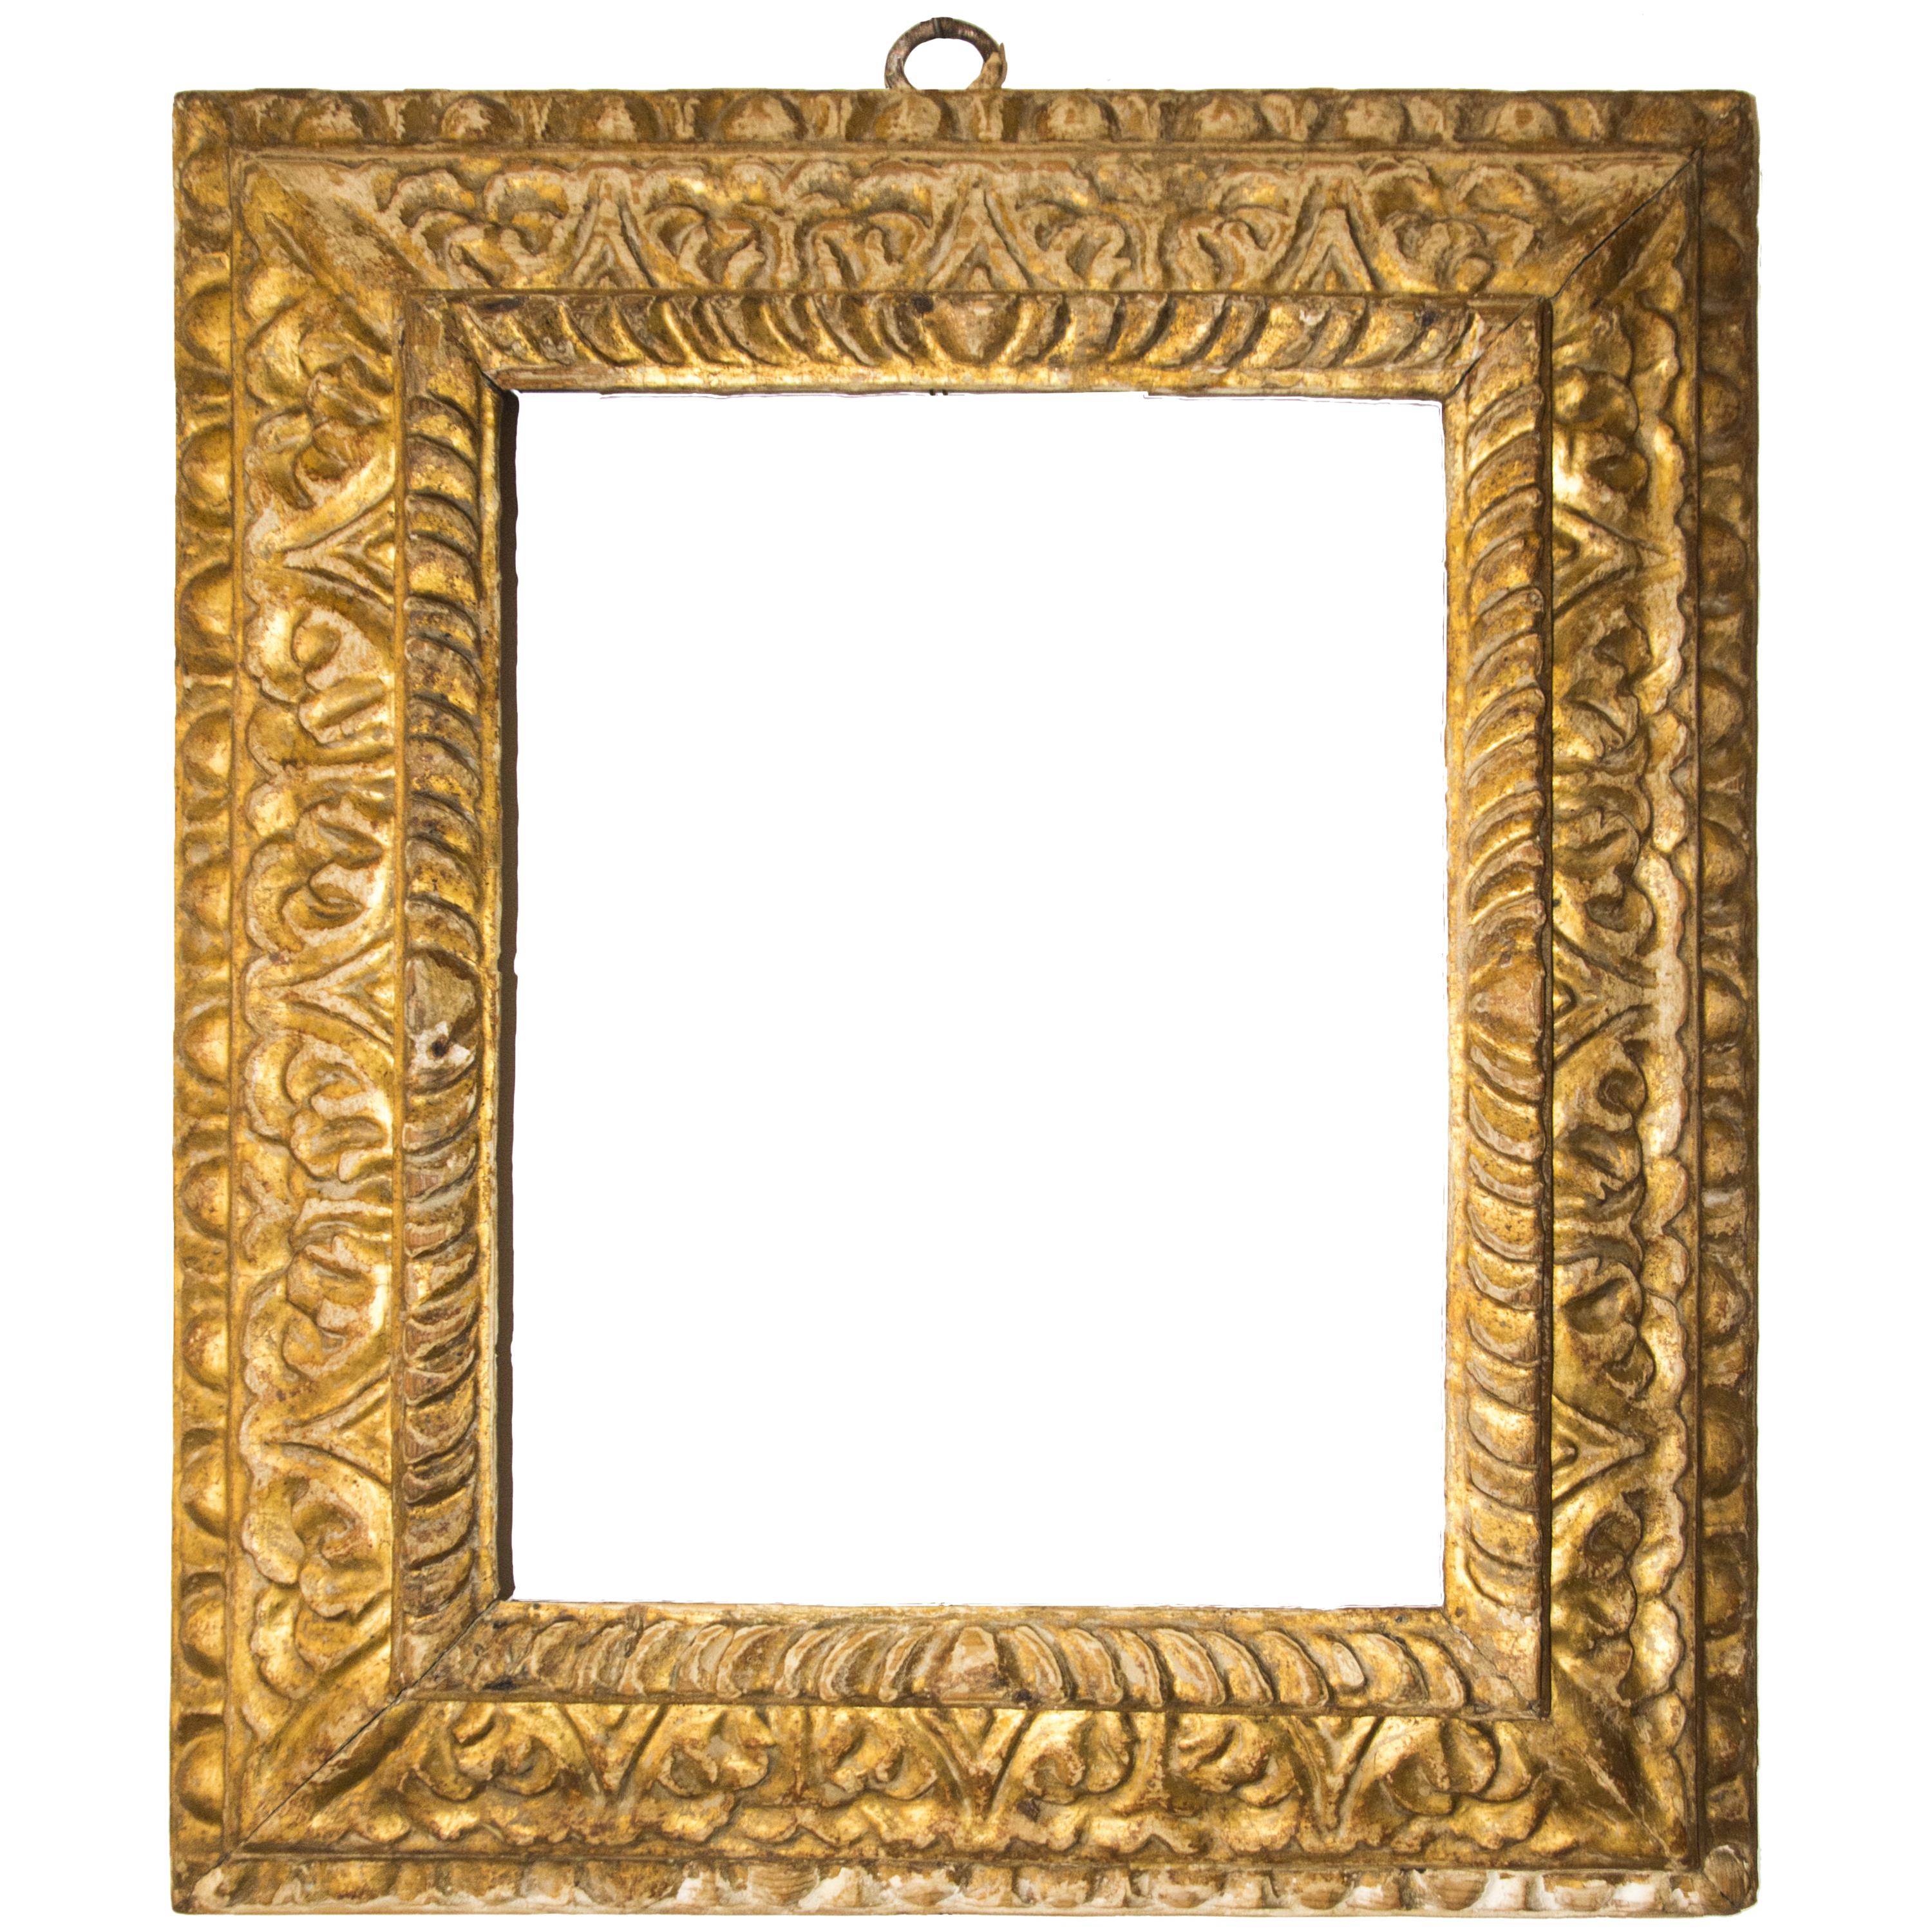 Tuscany Frame, 16th Century